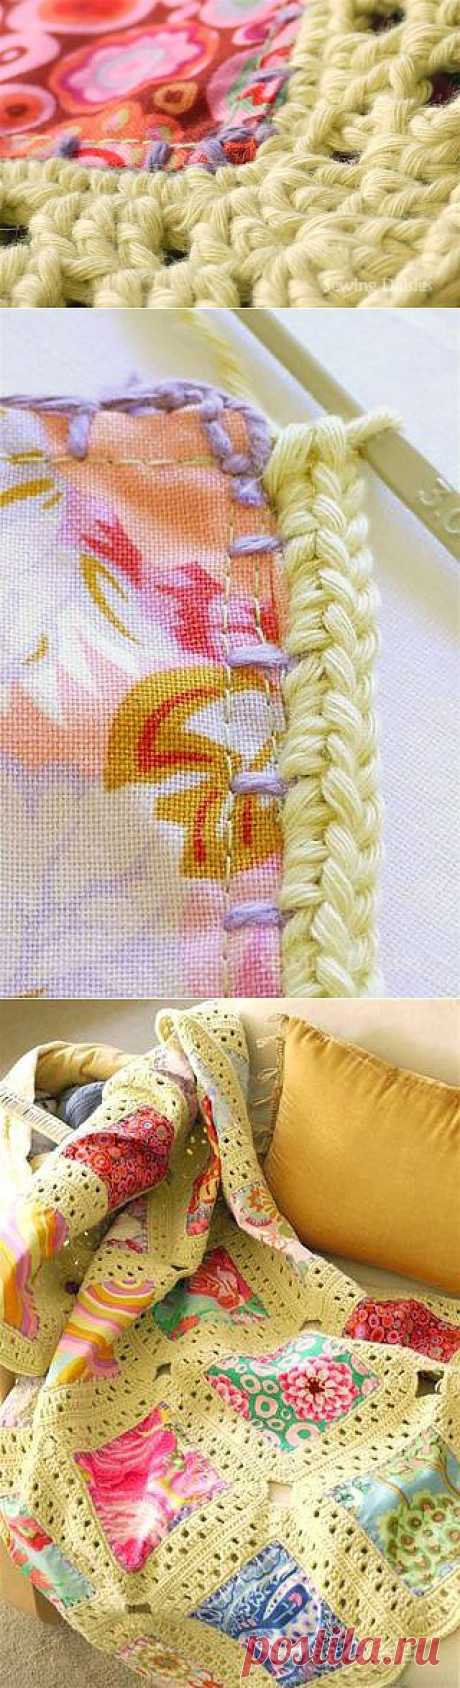 Ткань и вязание-Kaffe Fusion Blanket Completed!... - Sewing Daisies